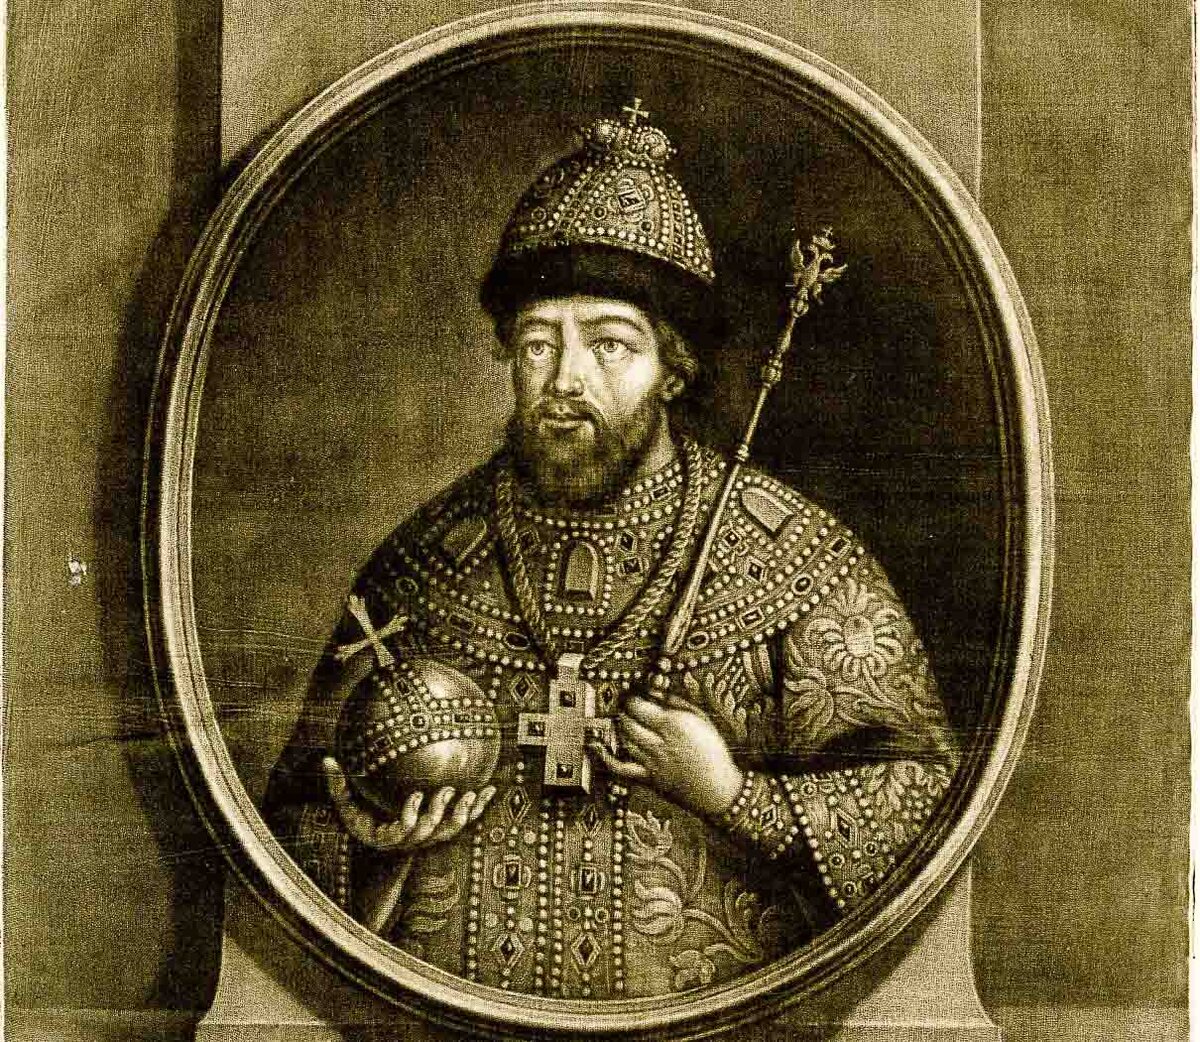 Борис Годунов (1552 – 1605)